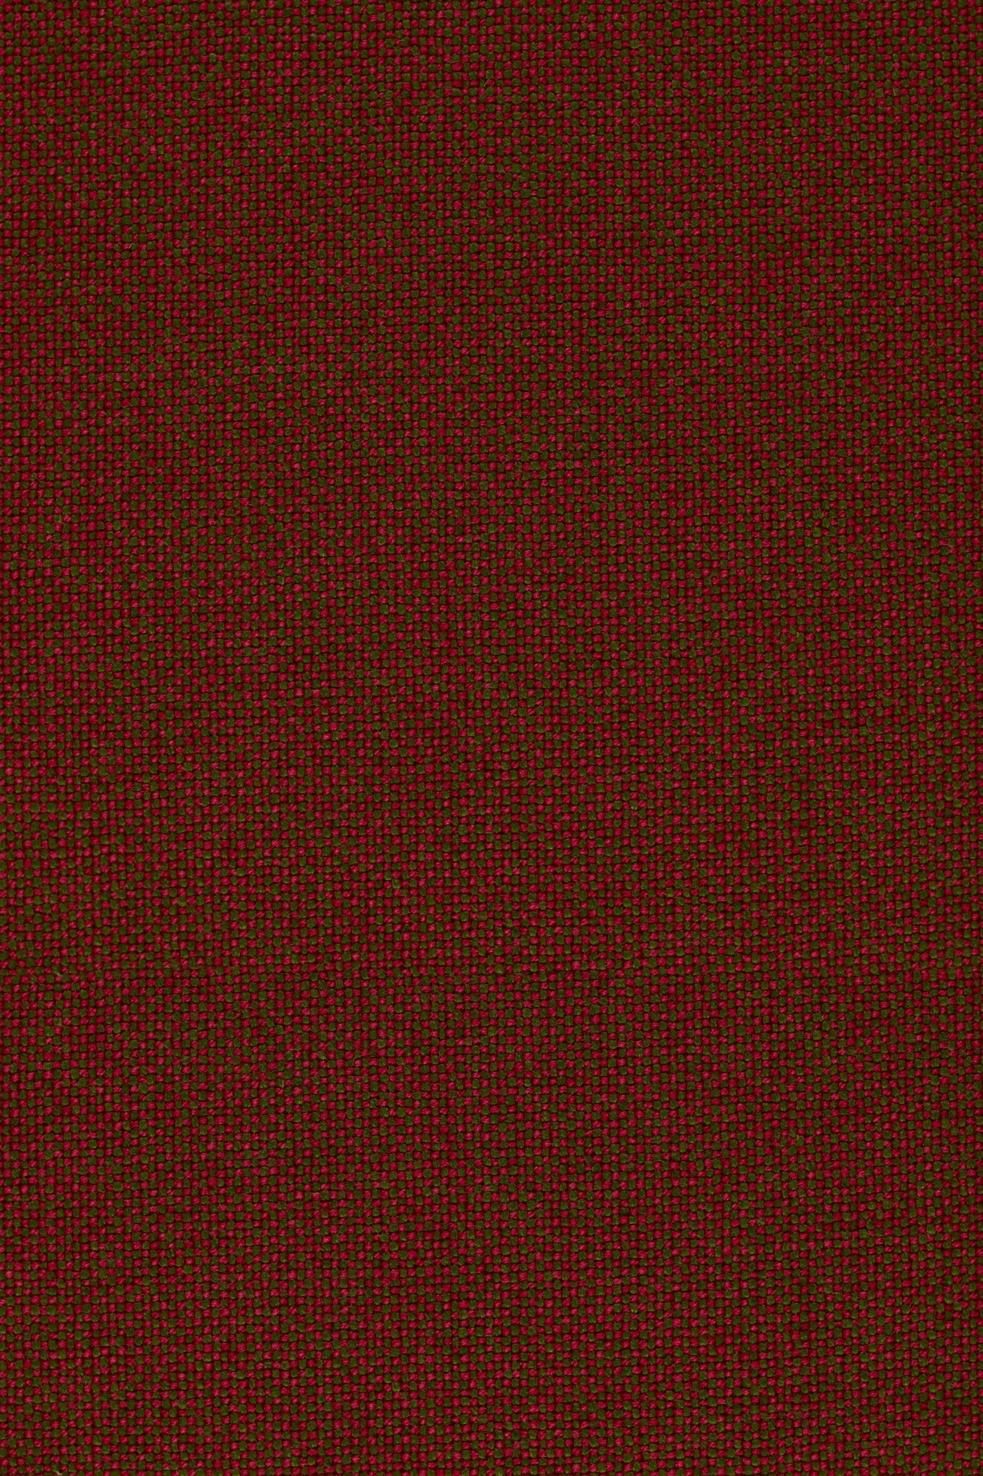 Fabric sample Hallingdal 65 660 red